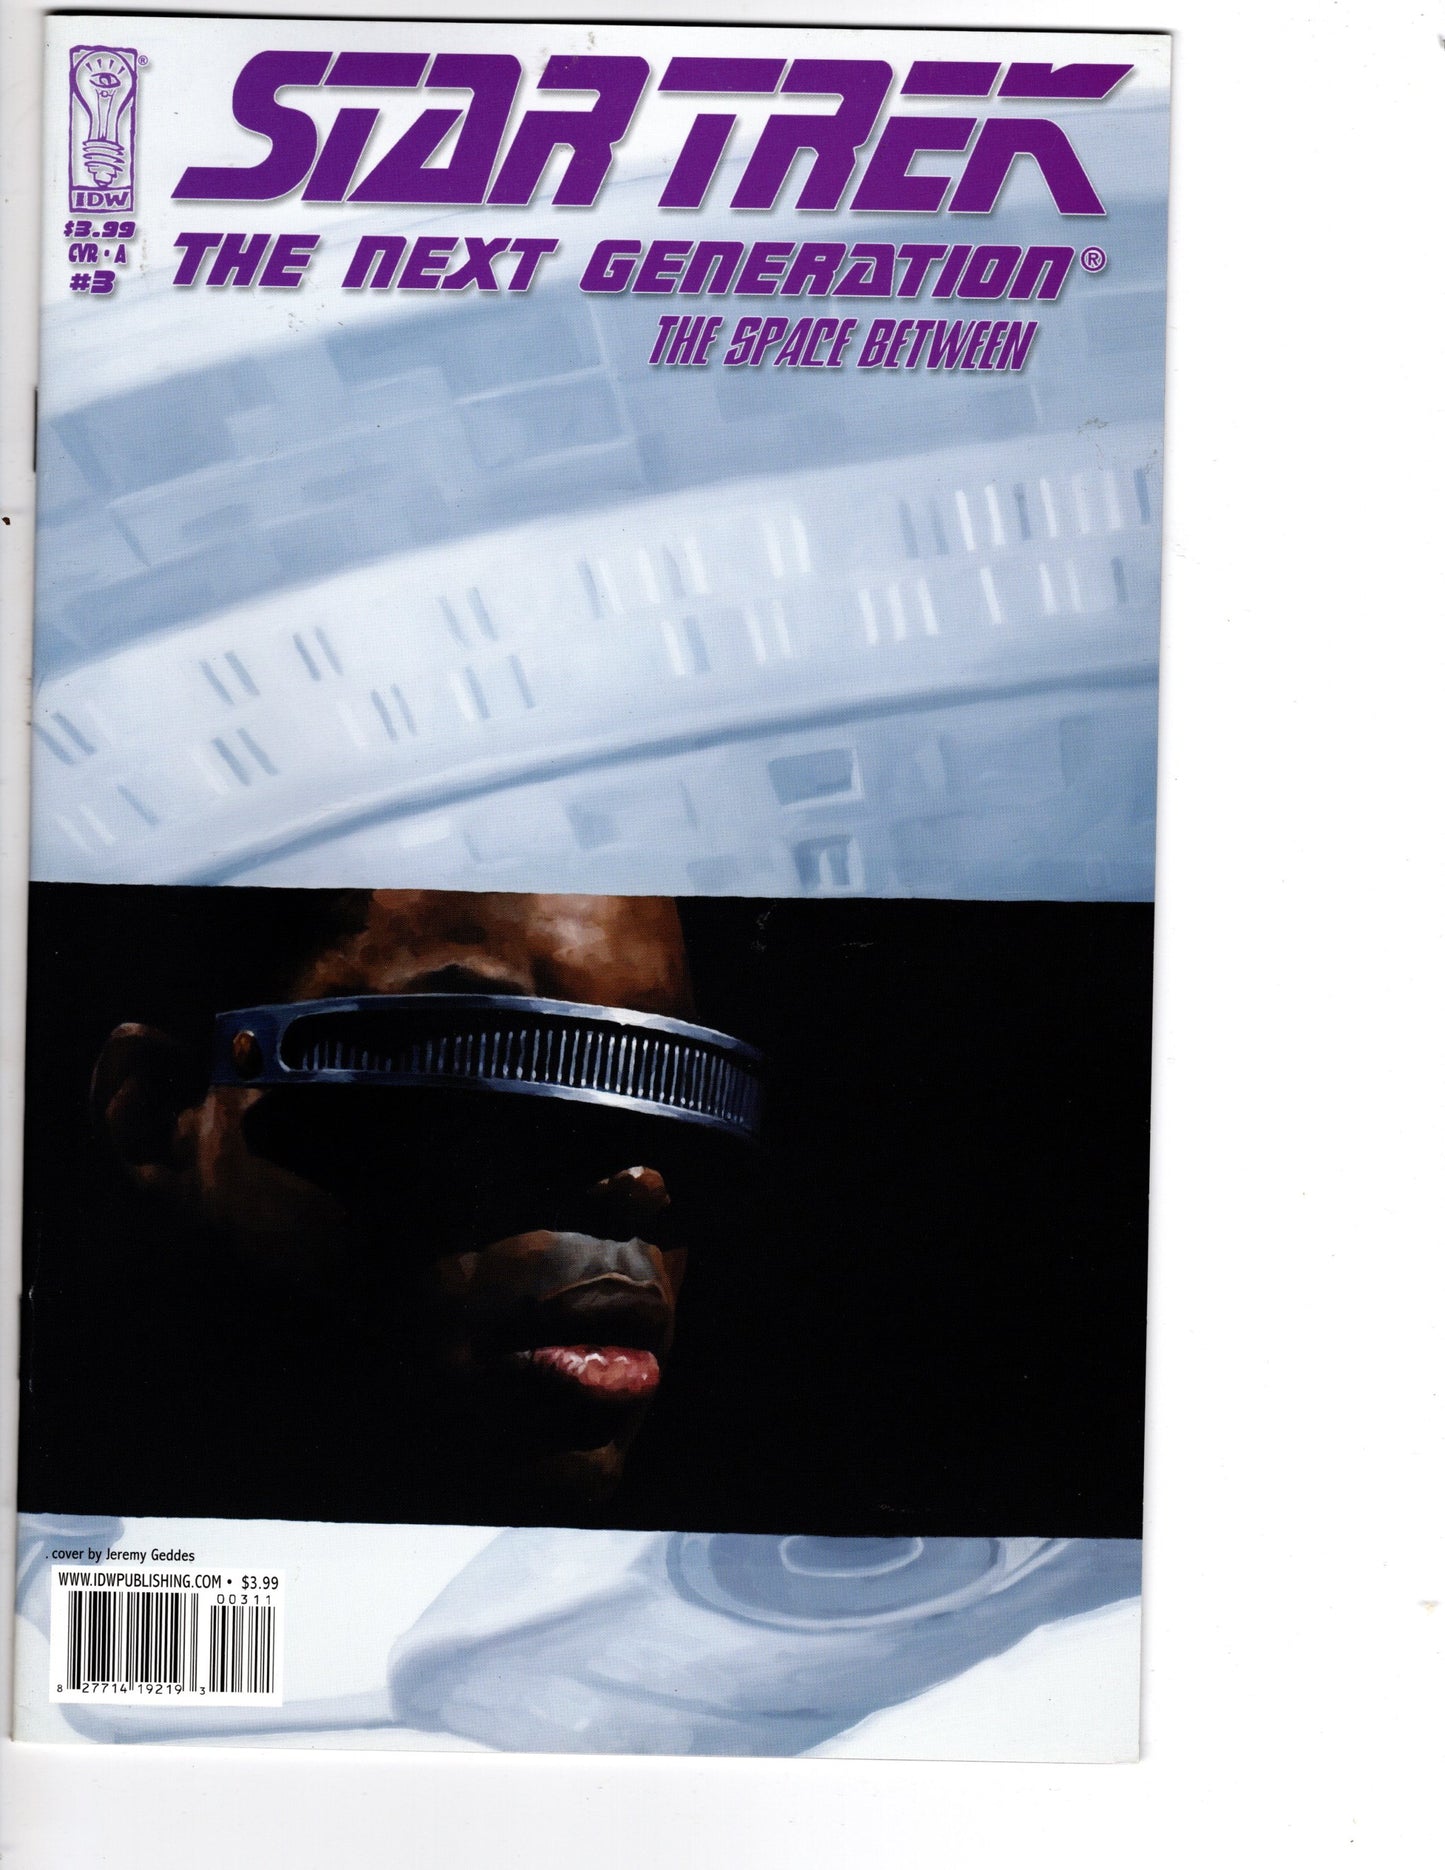 Star Trek : The Next Generation The Space Between #3